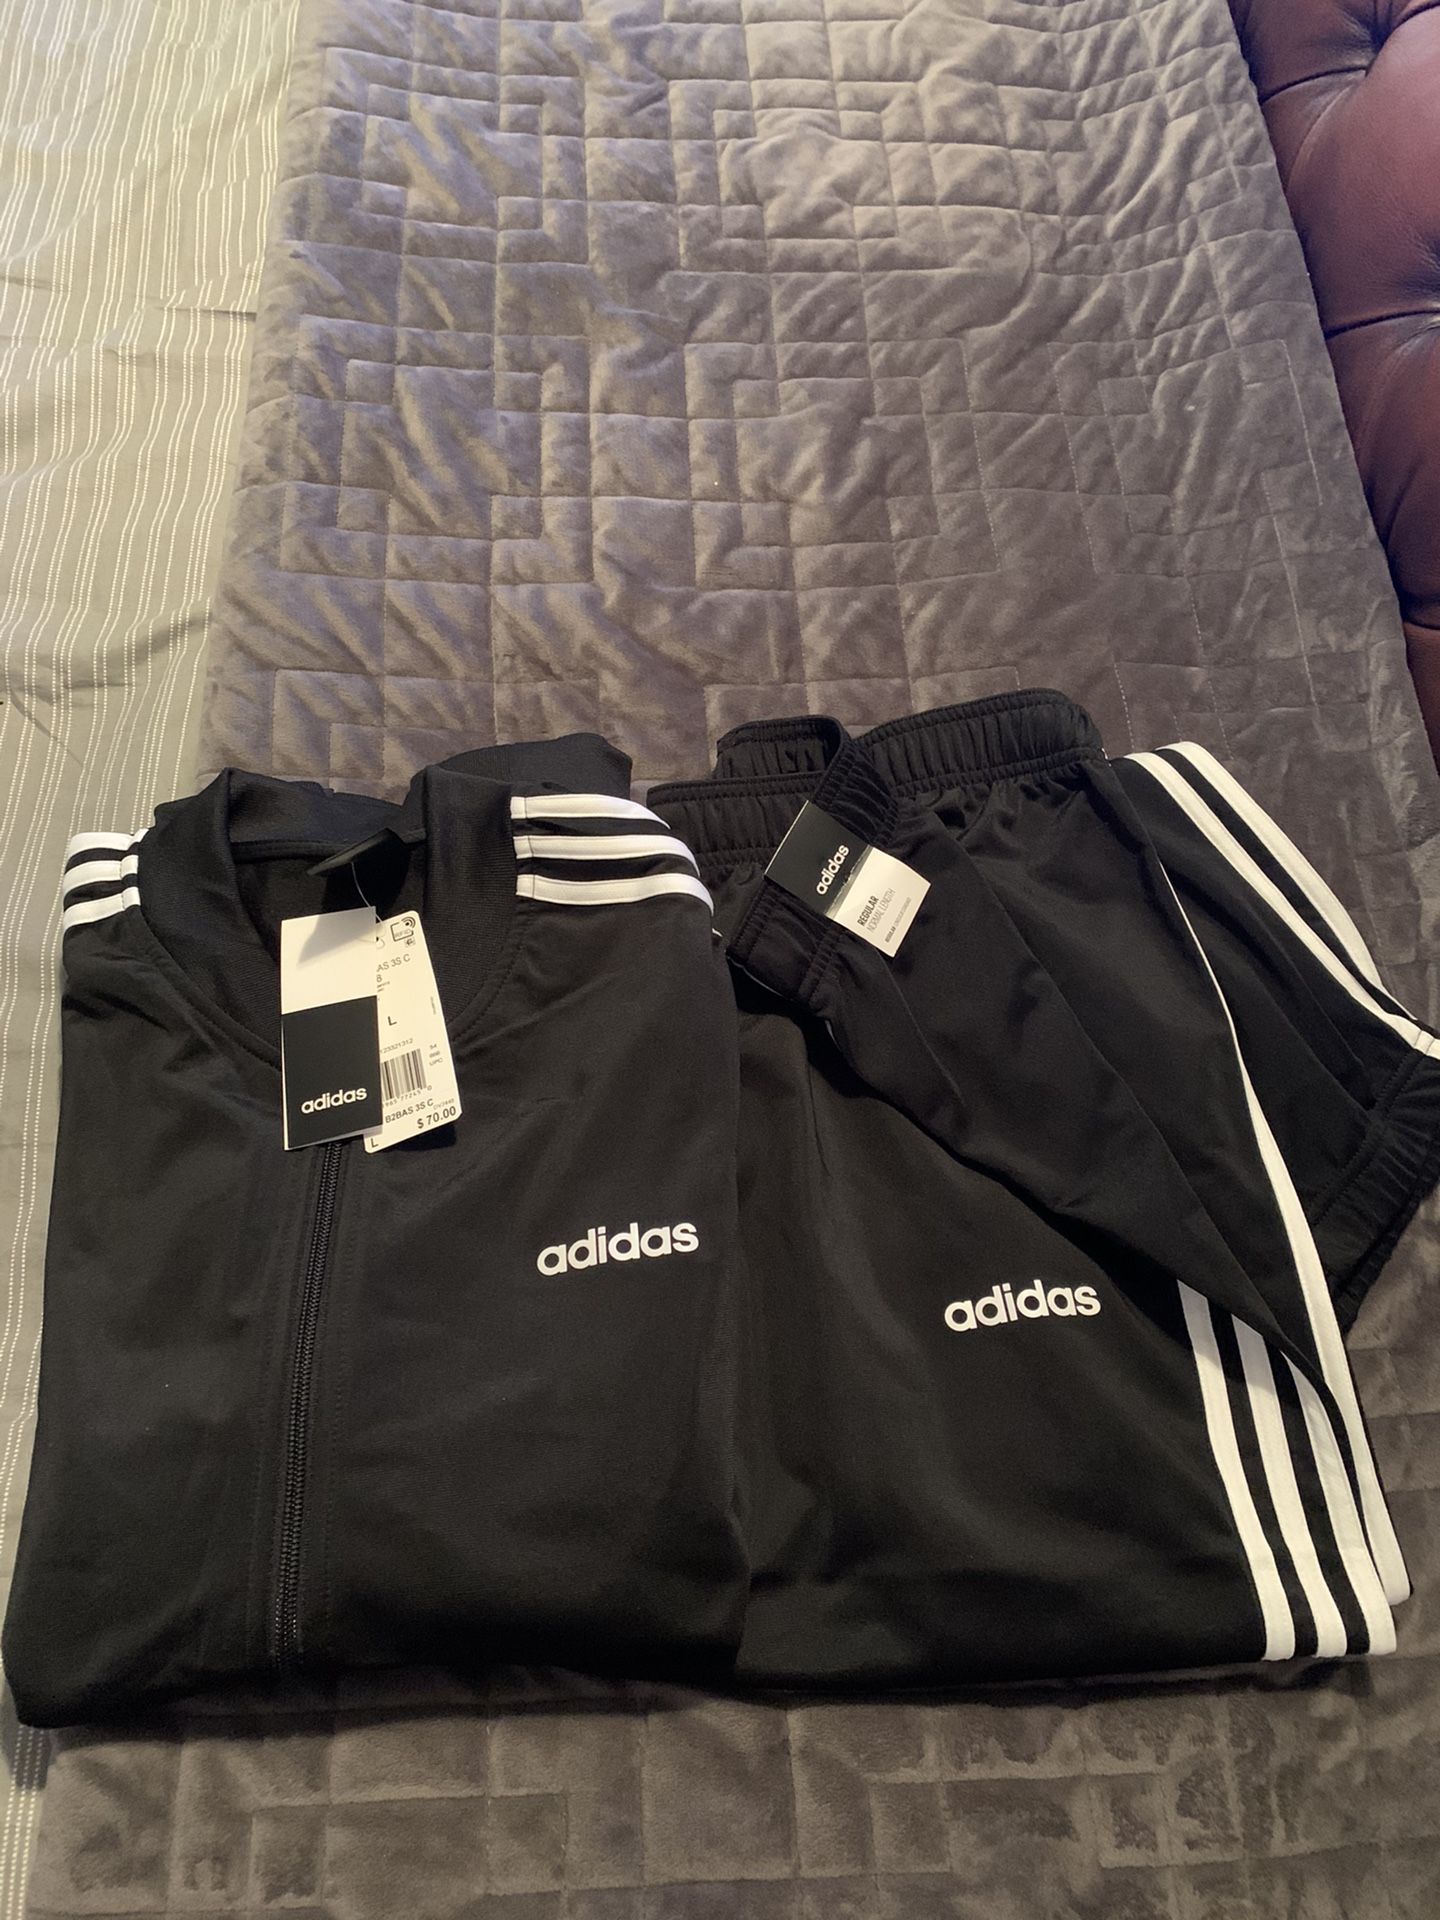 Brand New Men’s Adidas Track Suit